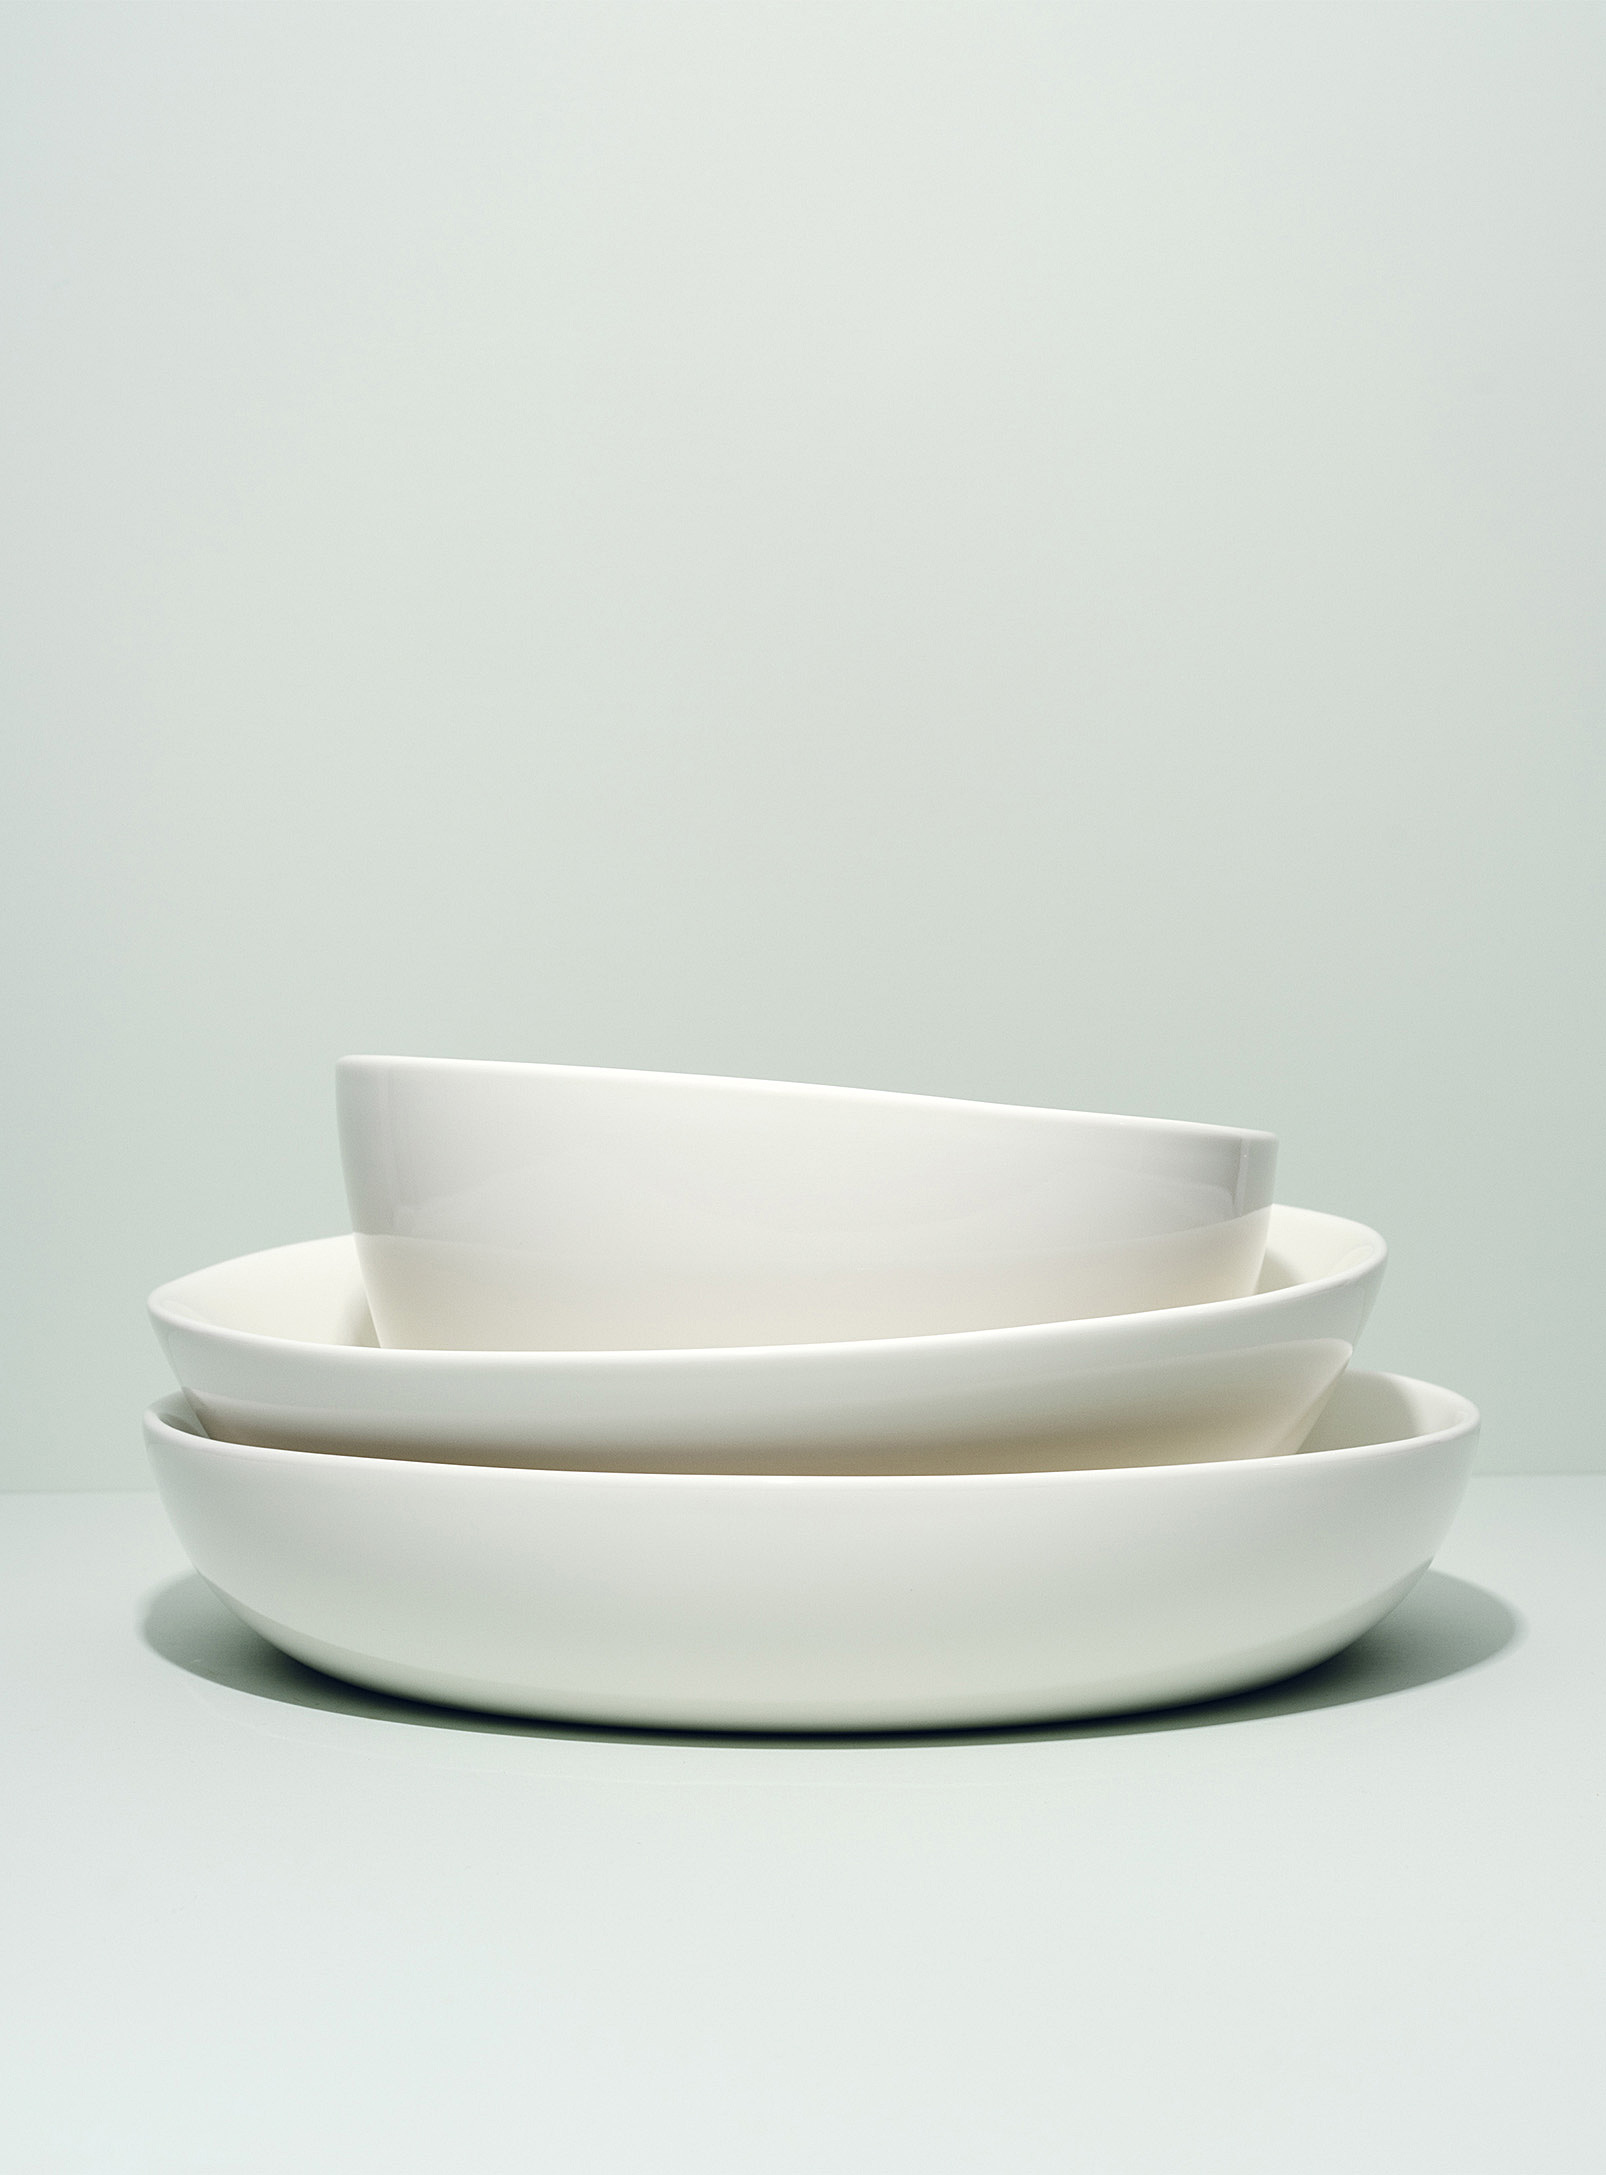 Fors Studio - Ceramic serving bowl set 3-piece set